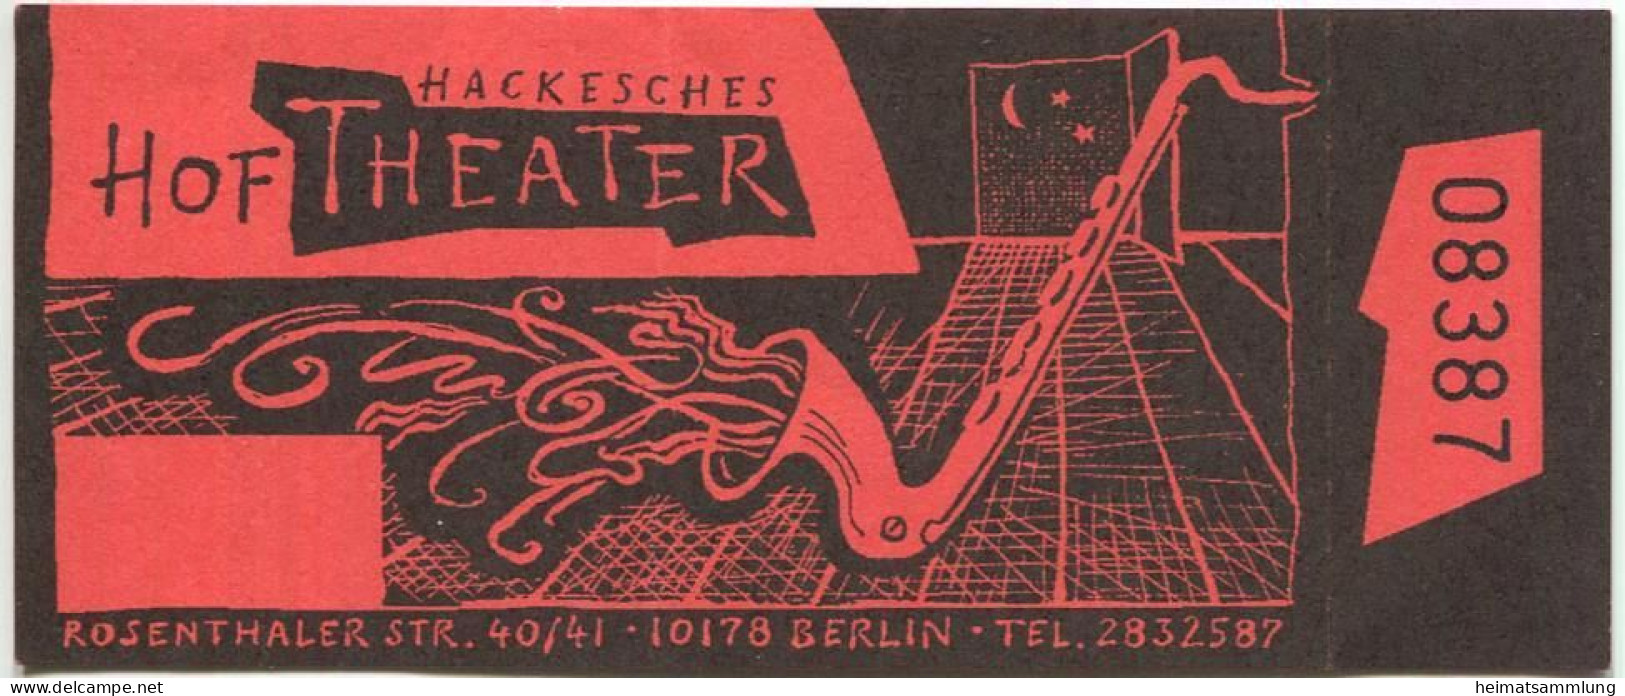 Deutschland - Berlin - Hackesches Hof Theater - Rosenthaler Str. 40/41 - Eintrittskarte - Tickets D'entrée